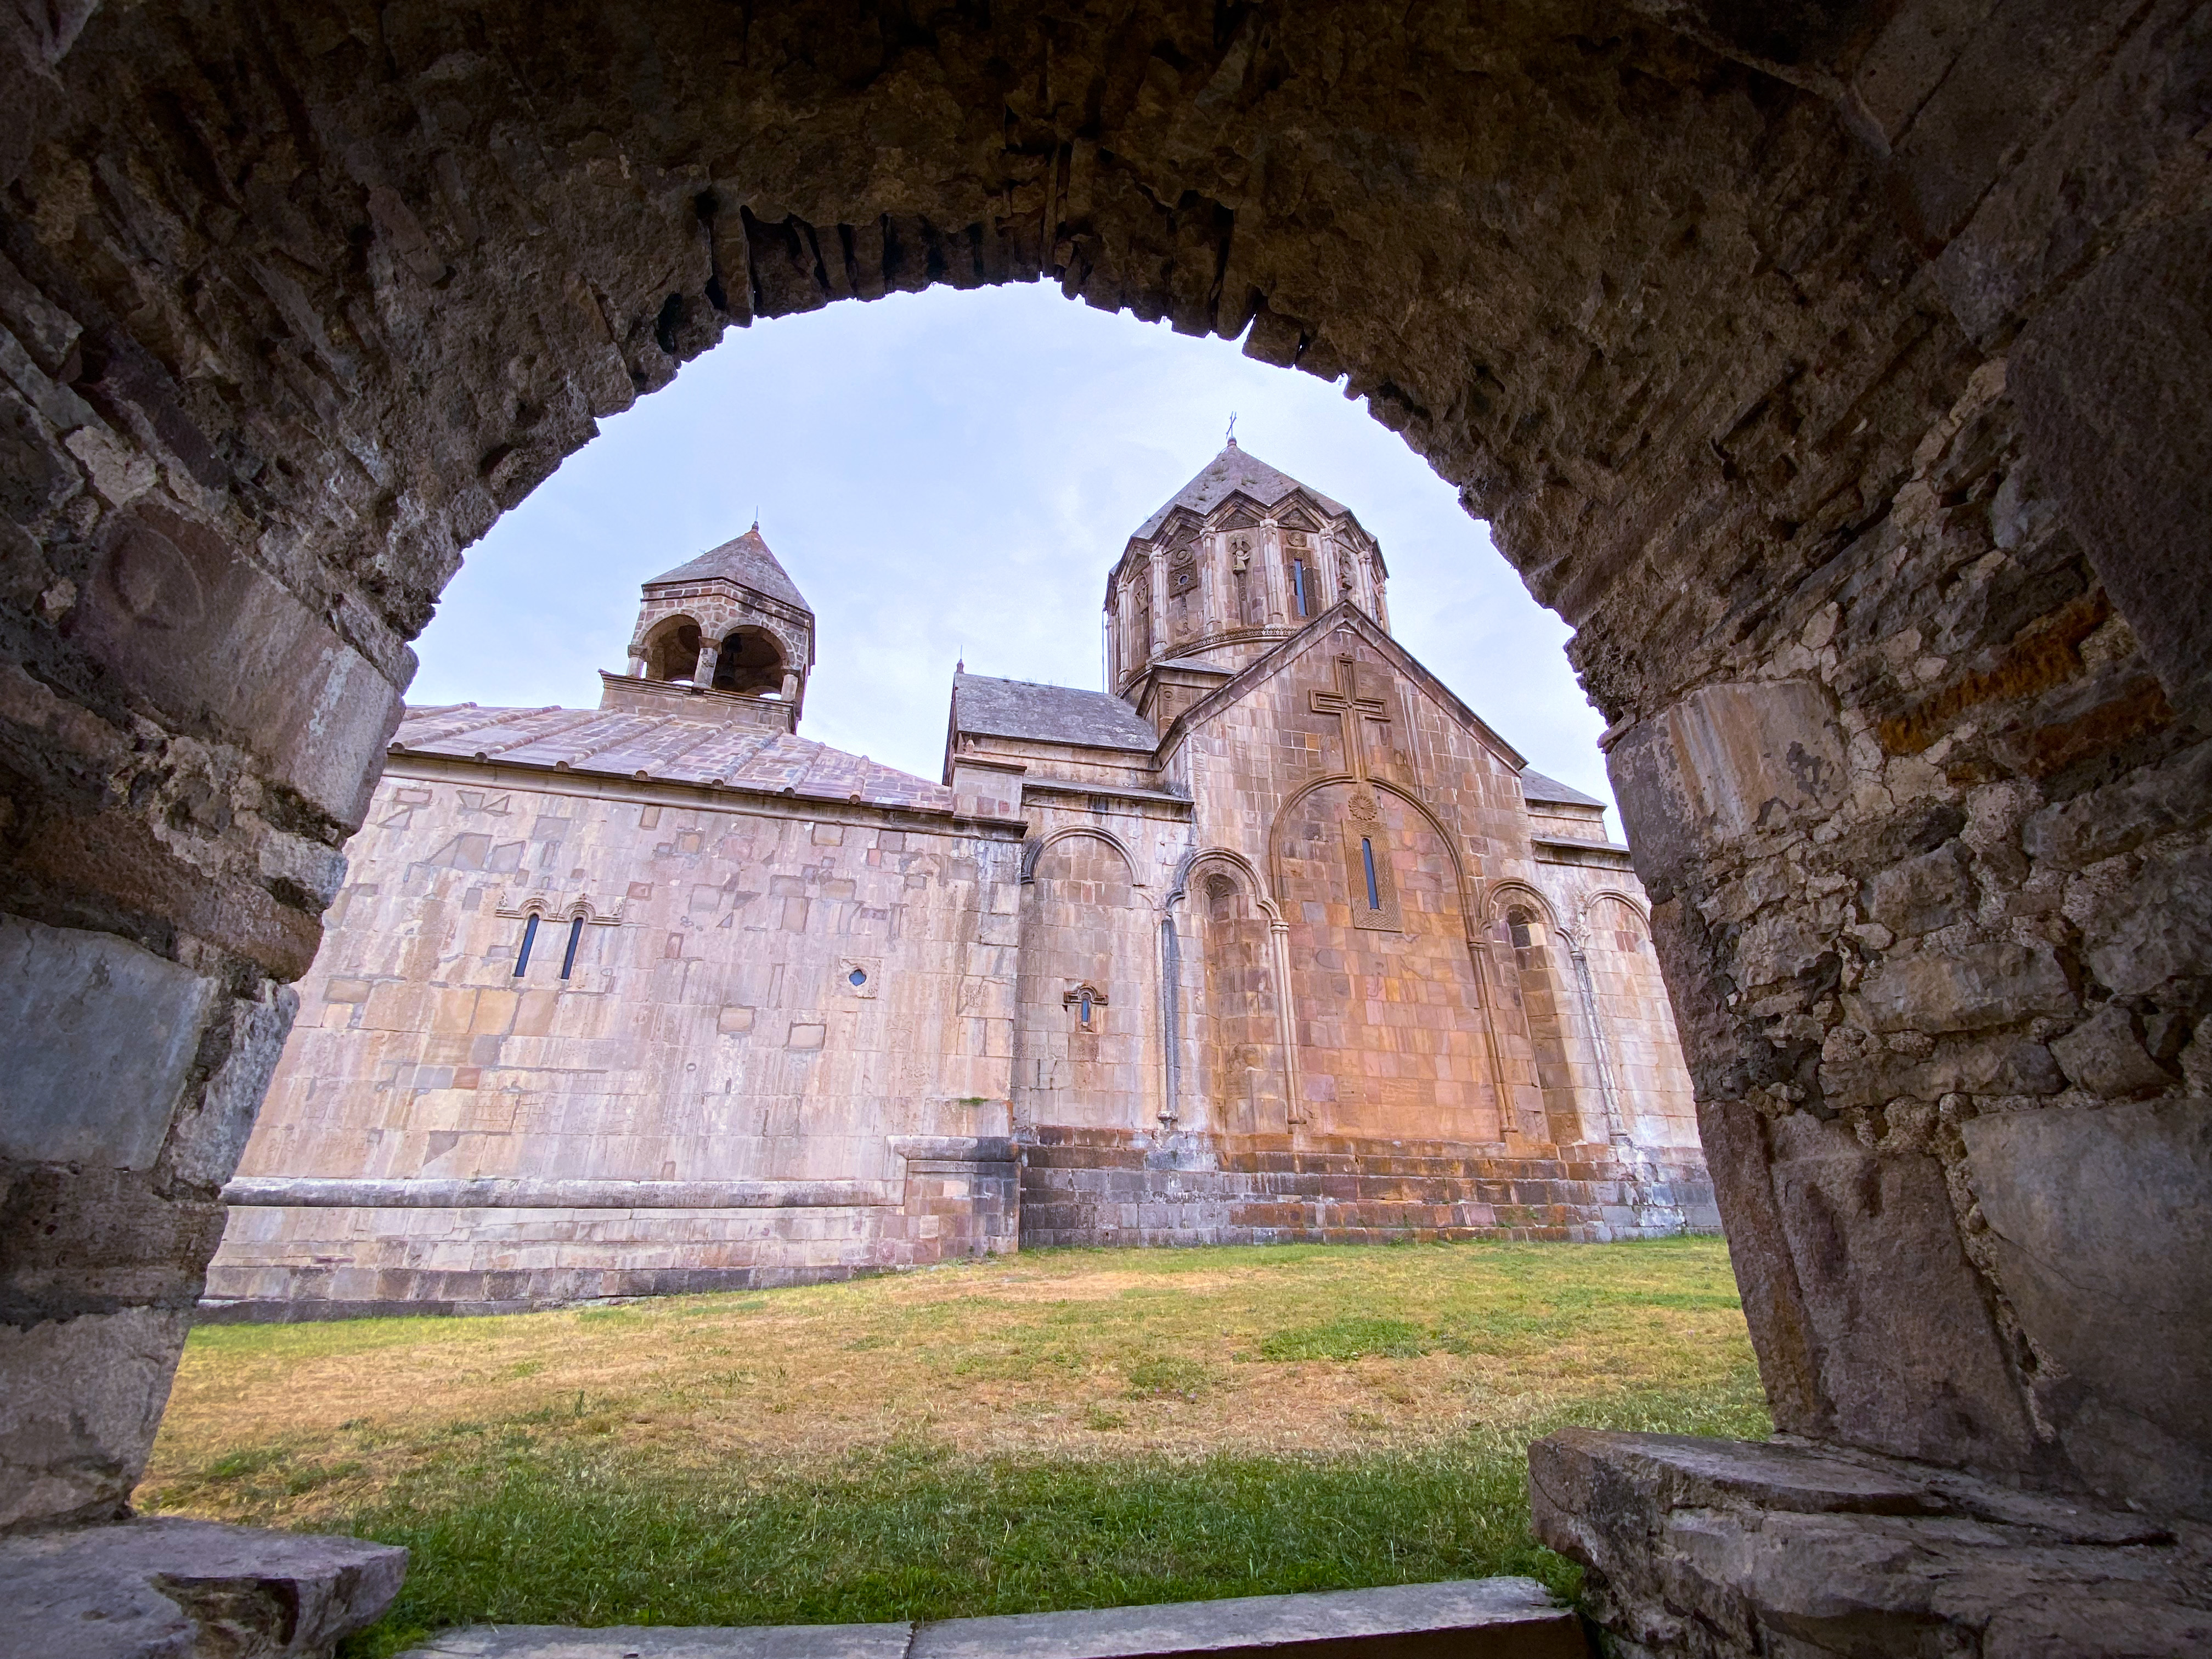 Zartonk Academy: An amazing visit to a jewel of Artsakh